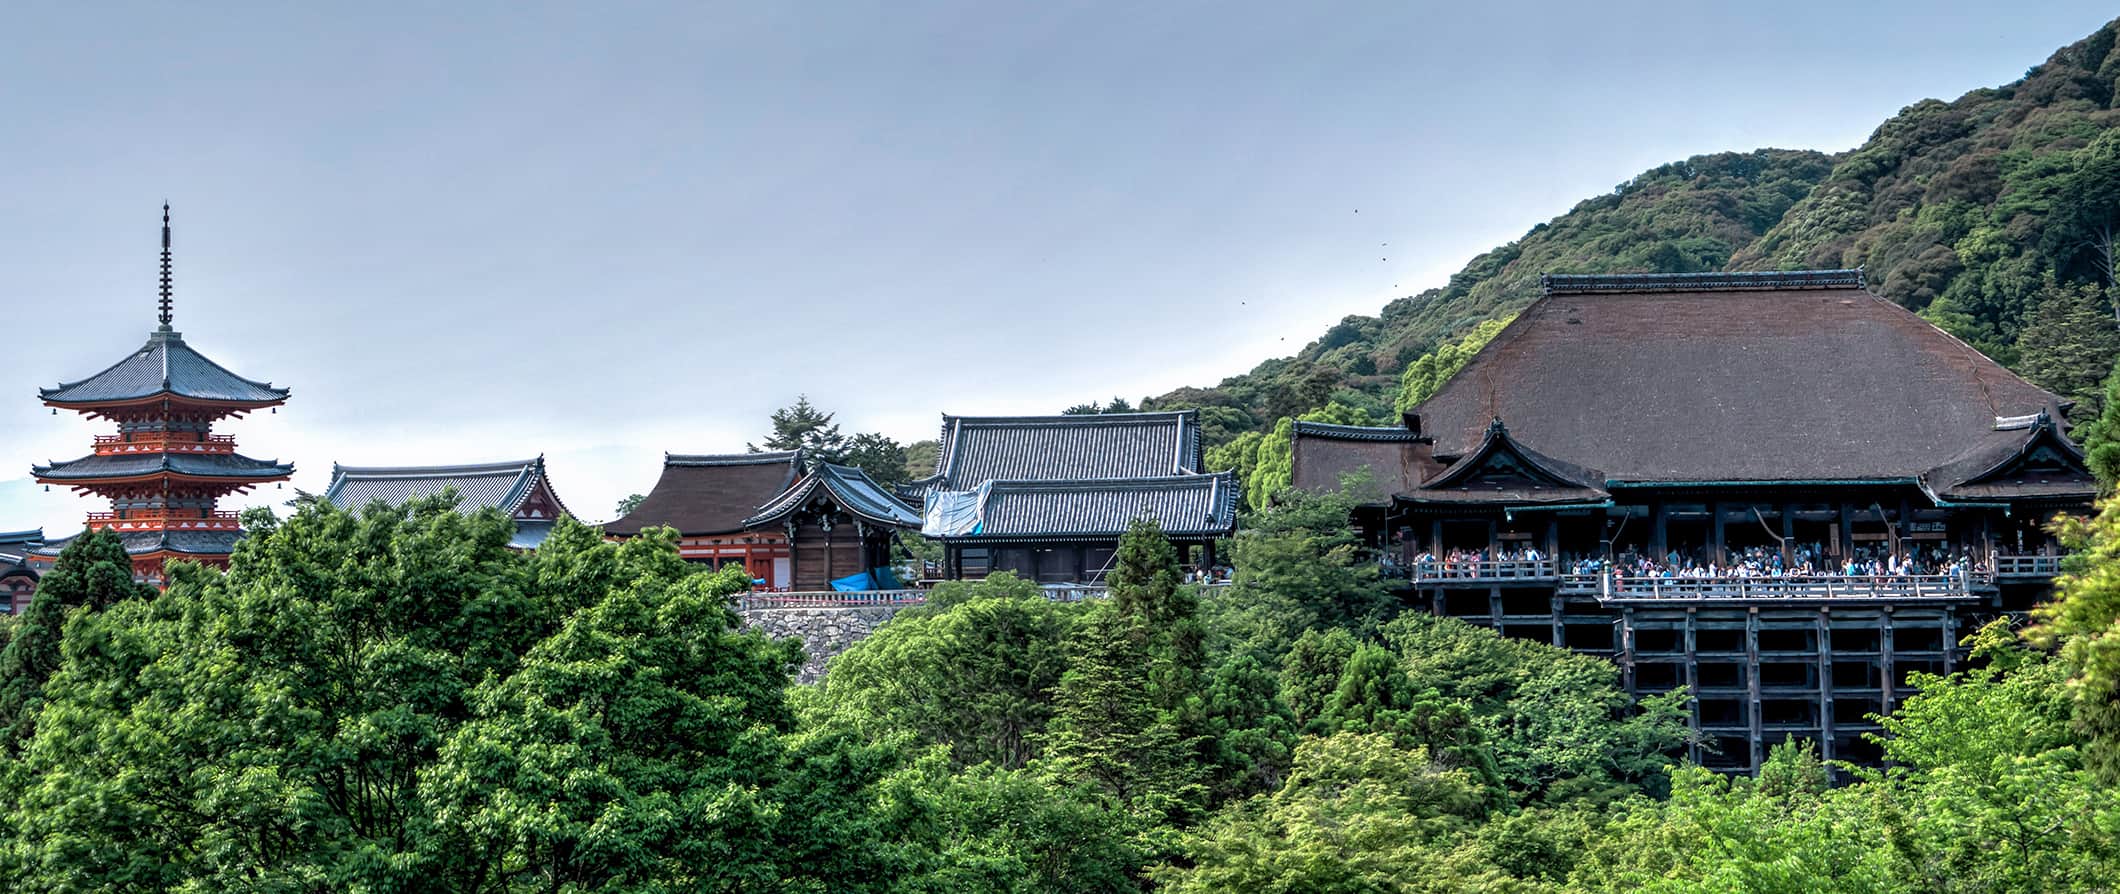 temple views in Kyoto, Japan